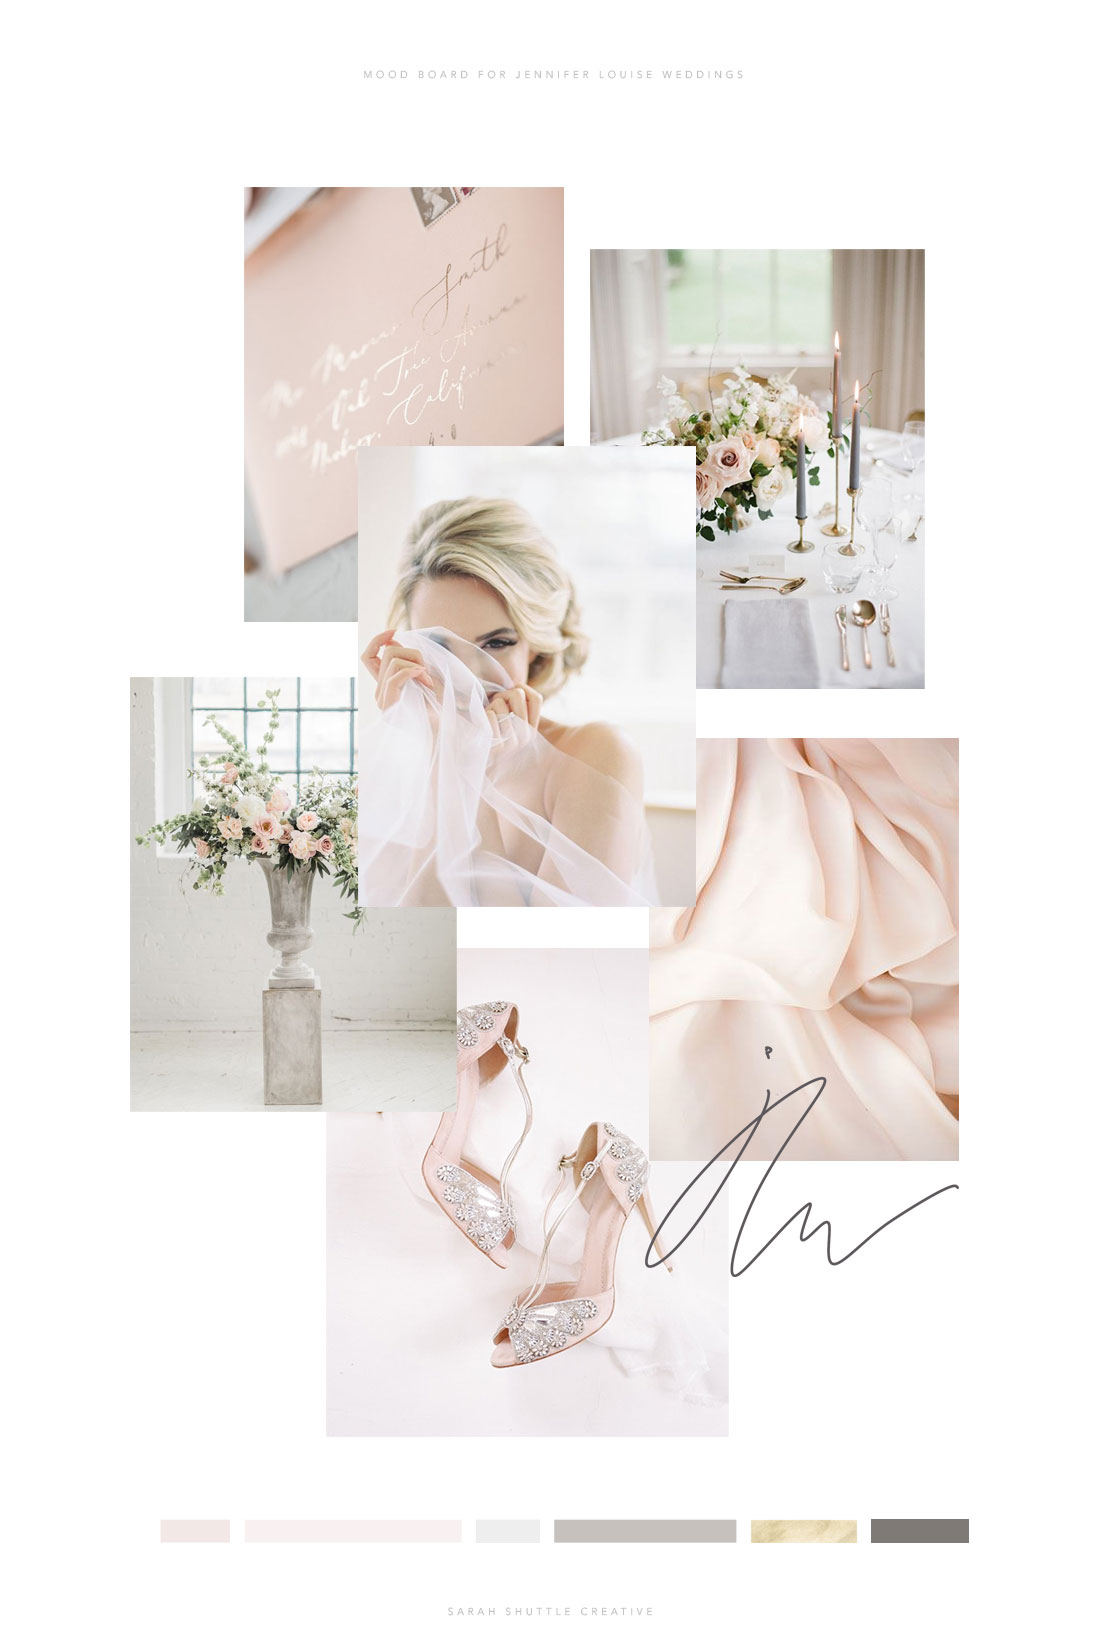 Mood board for feminine branding of wedding business with blush colour palette